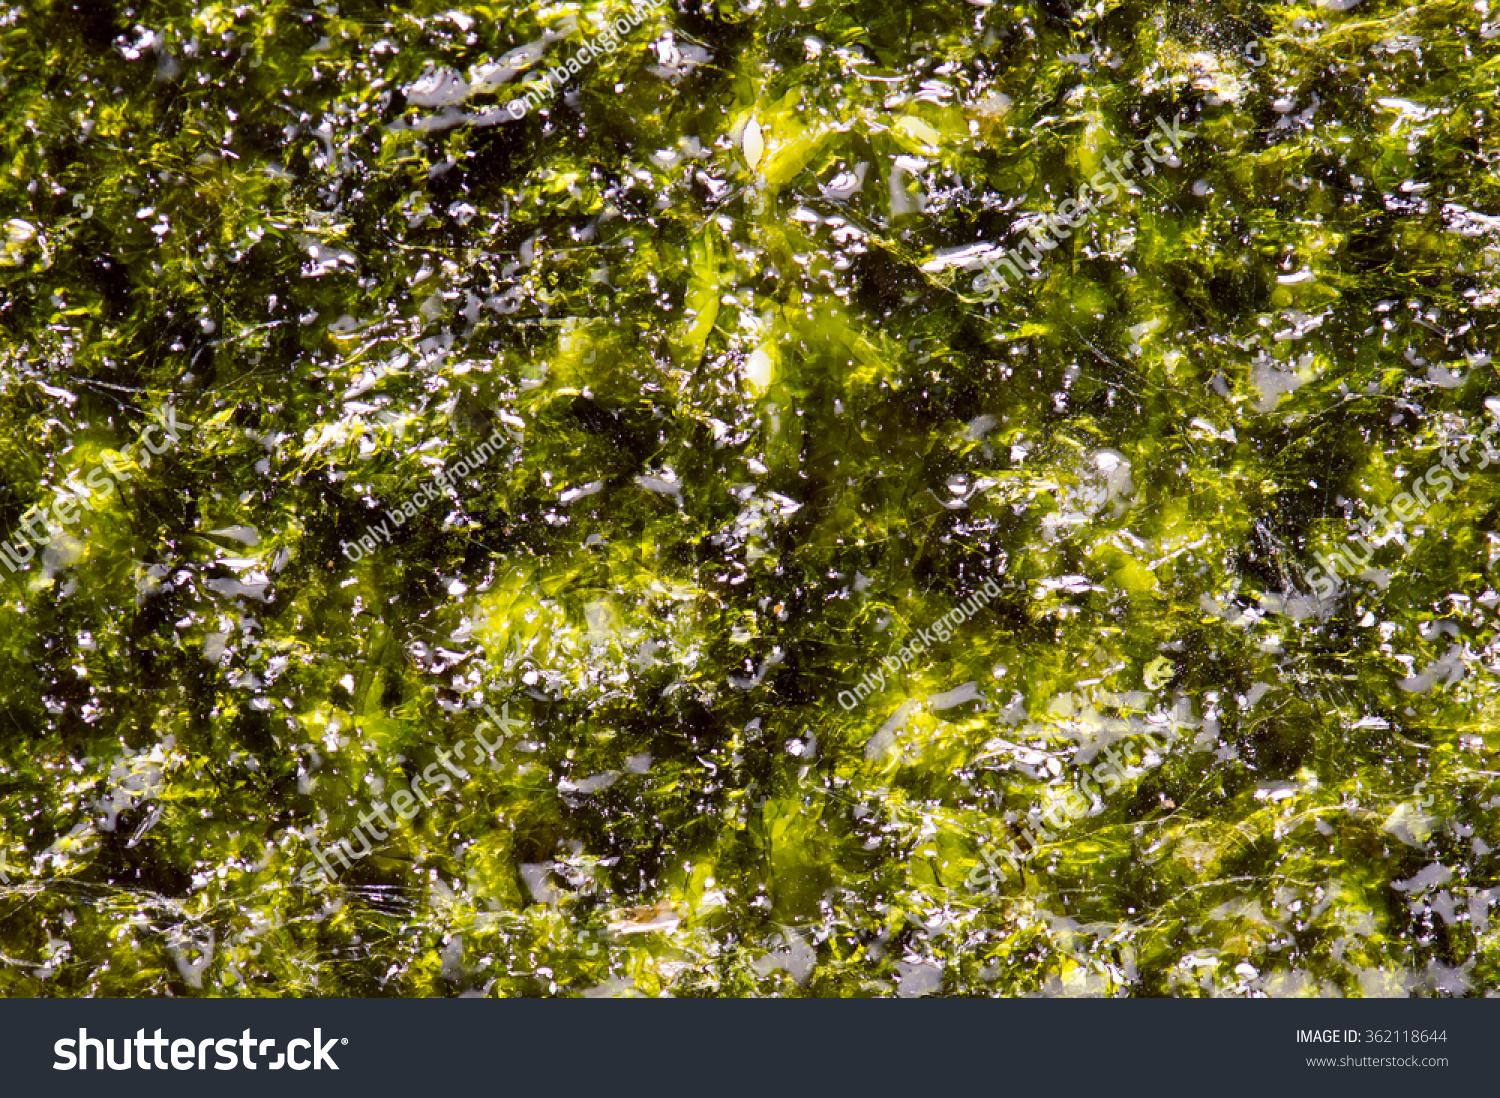 The algae background texture #362118644